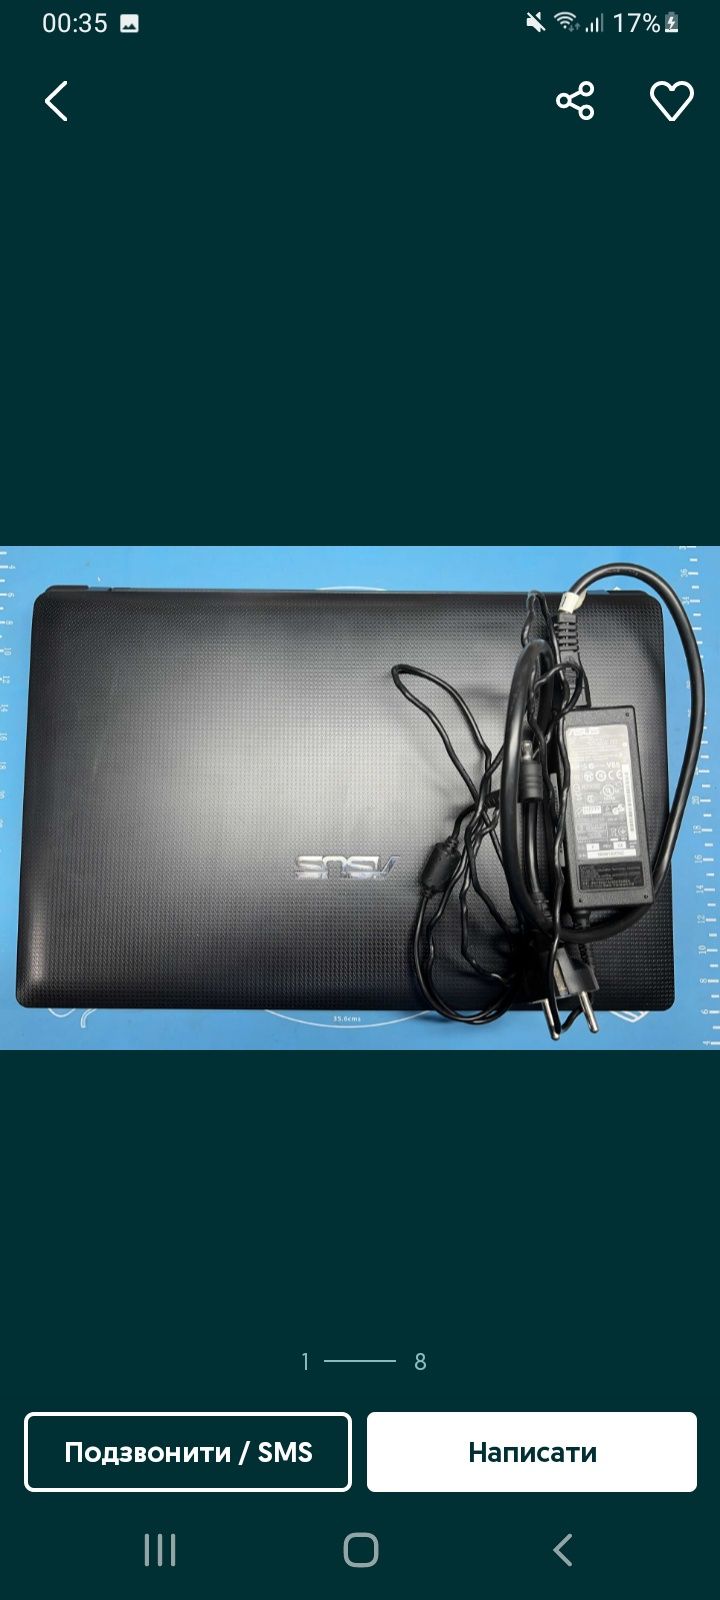 Срочно продам ноутбук ASUS X54L XS130D